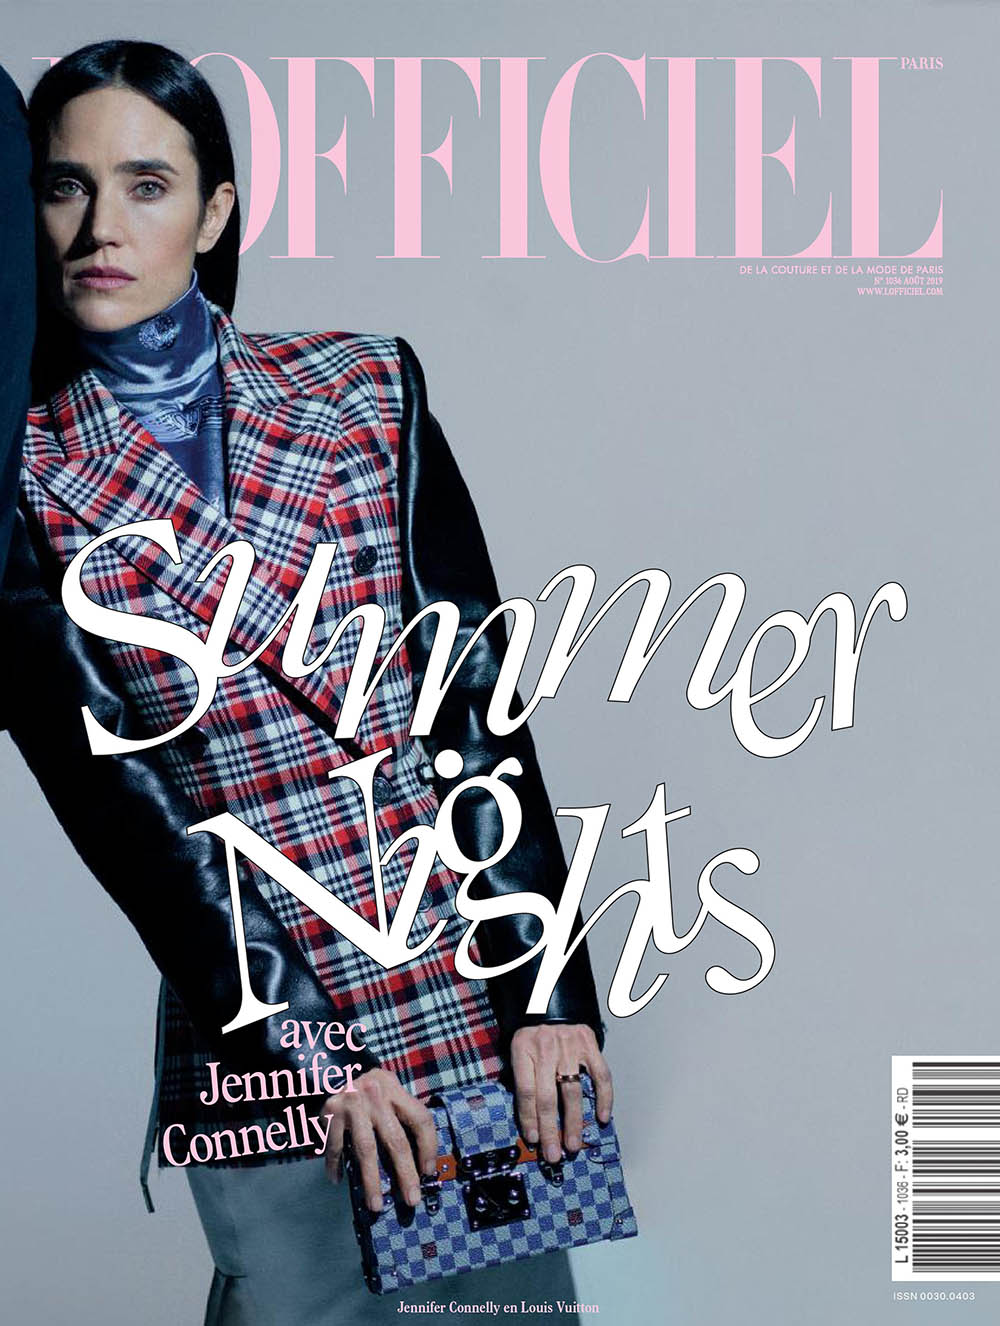 Jennifer Connelly covers L’Officiel Paris August 2019 by Marili Andre